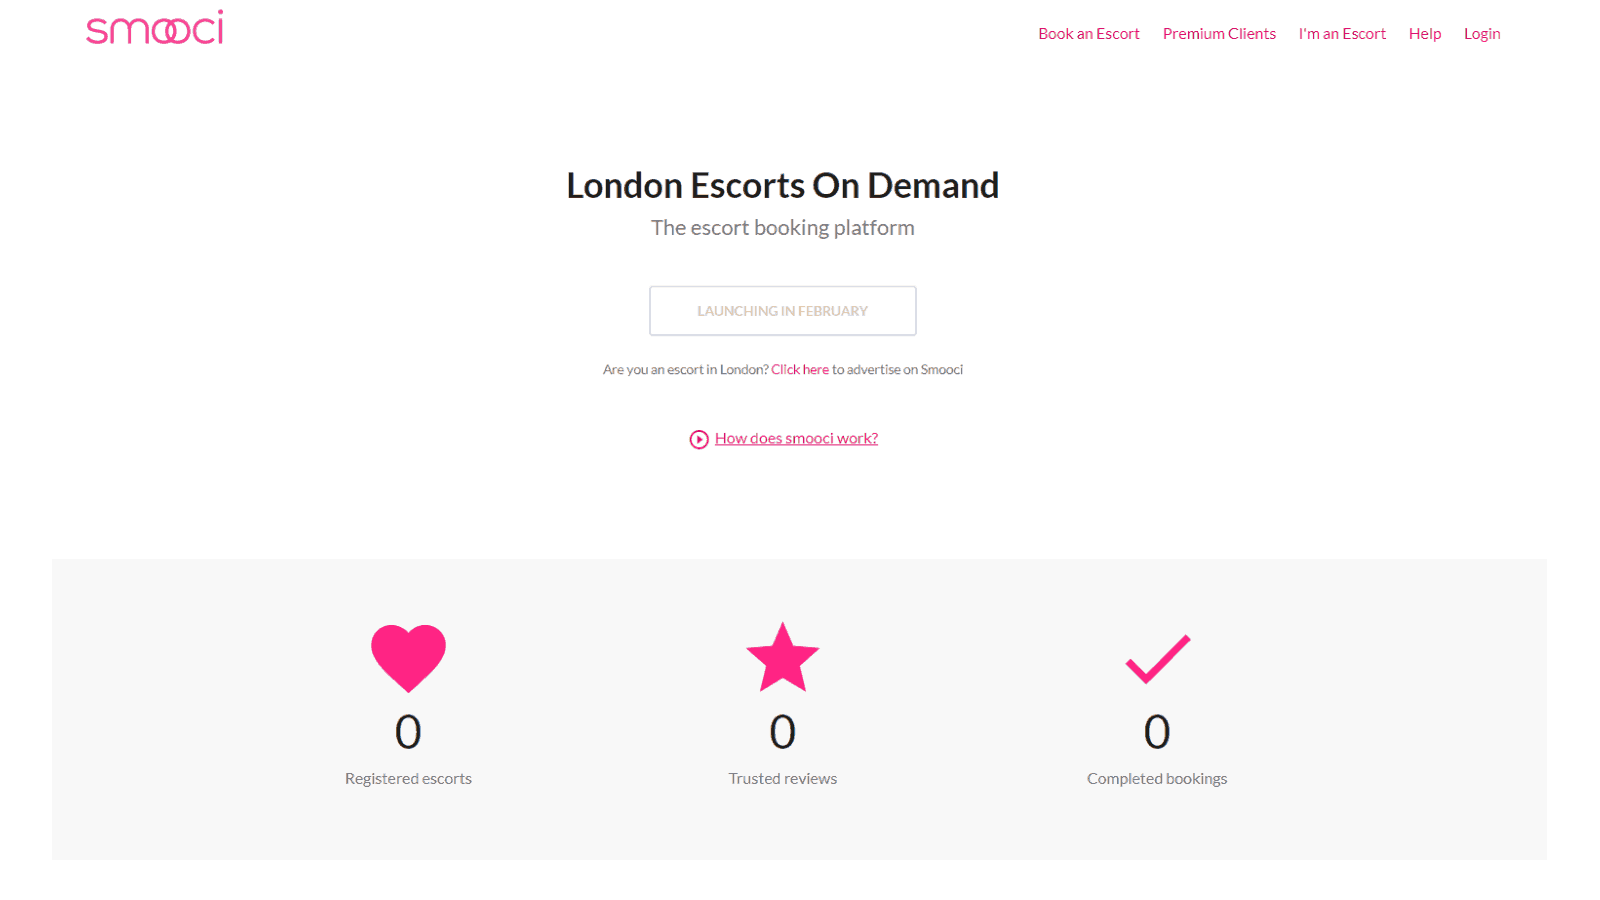 Smooci offers on-demand London escorts.